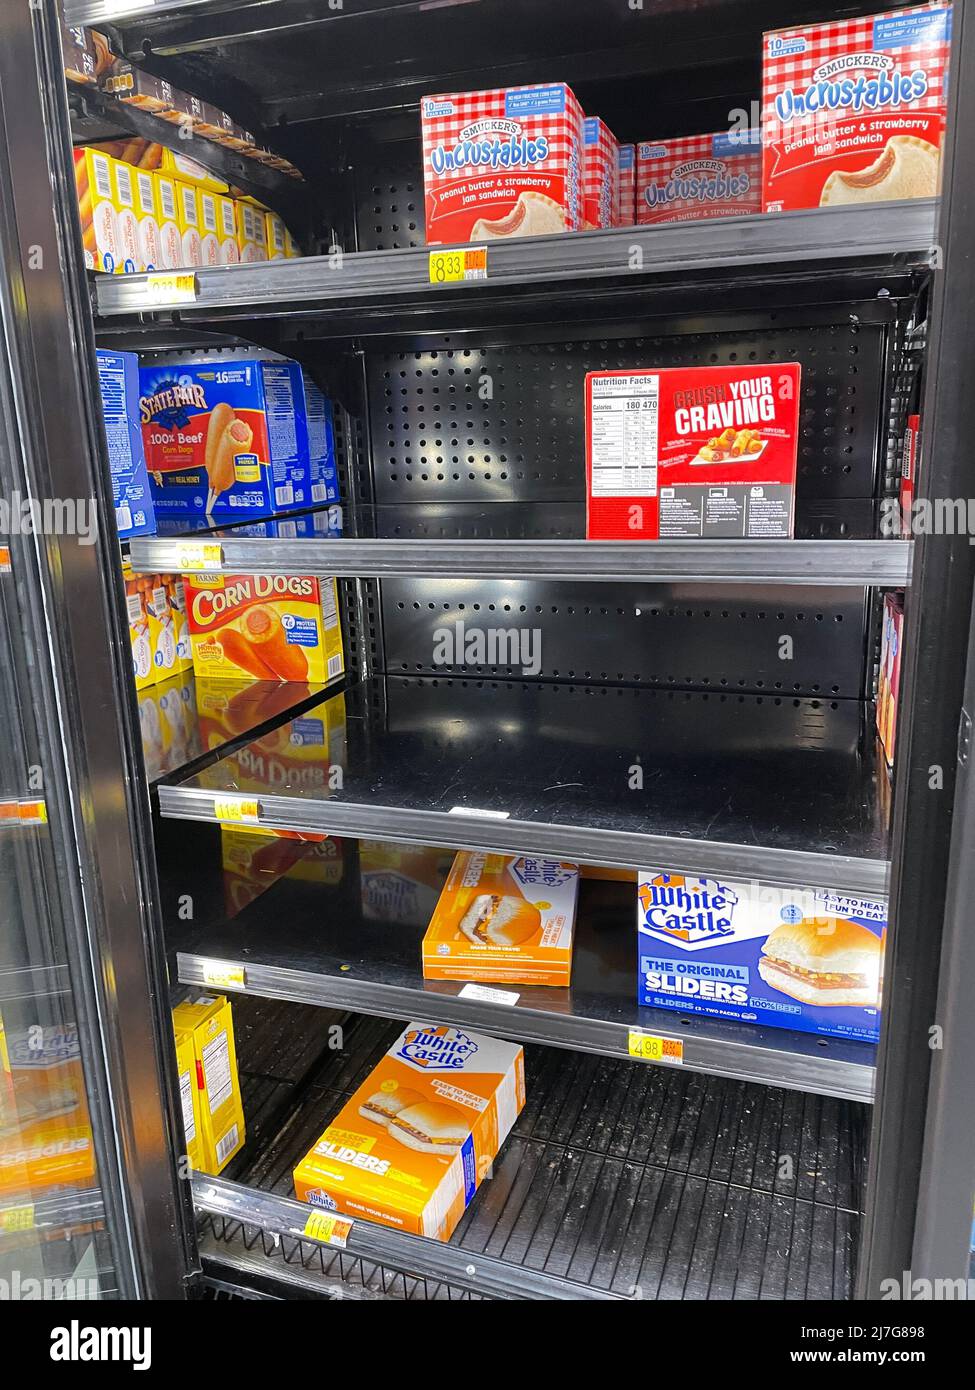 Grovetown, Ga USA - 04 20 22: Walmart freezer section empty holes and prices Stock Photo